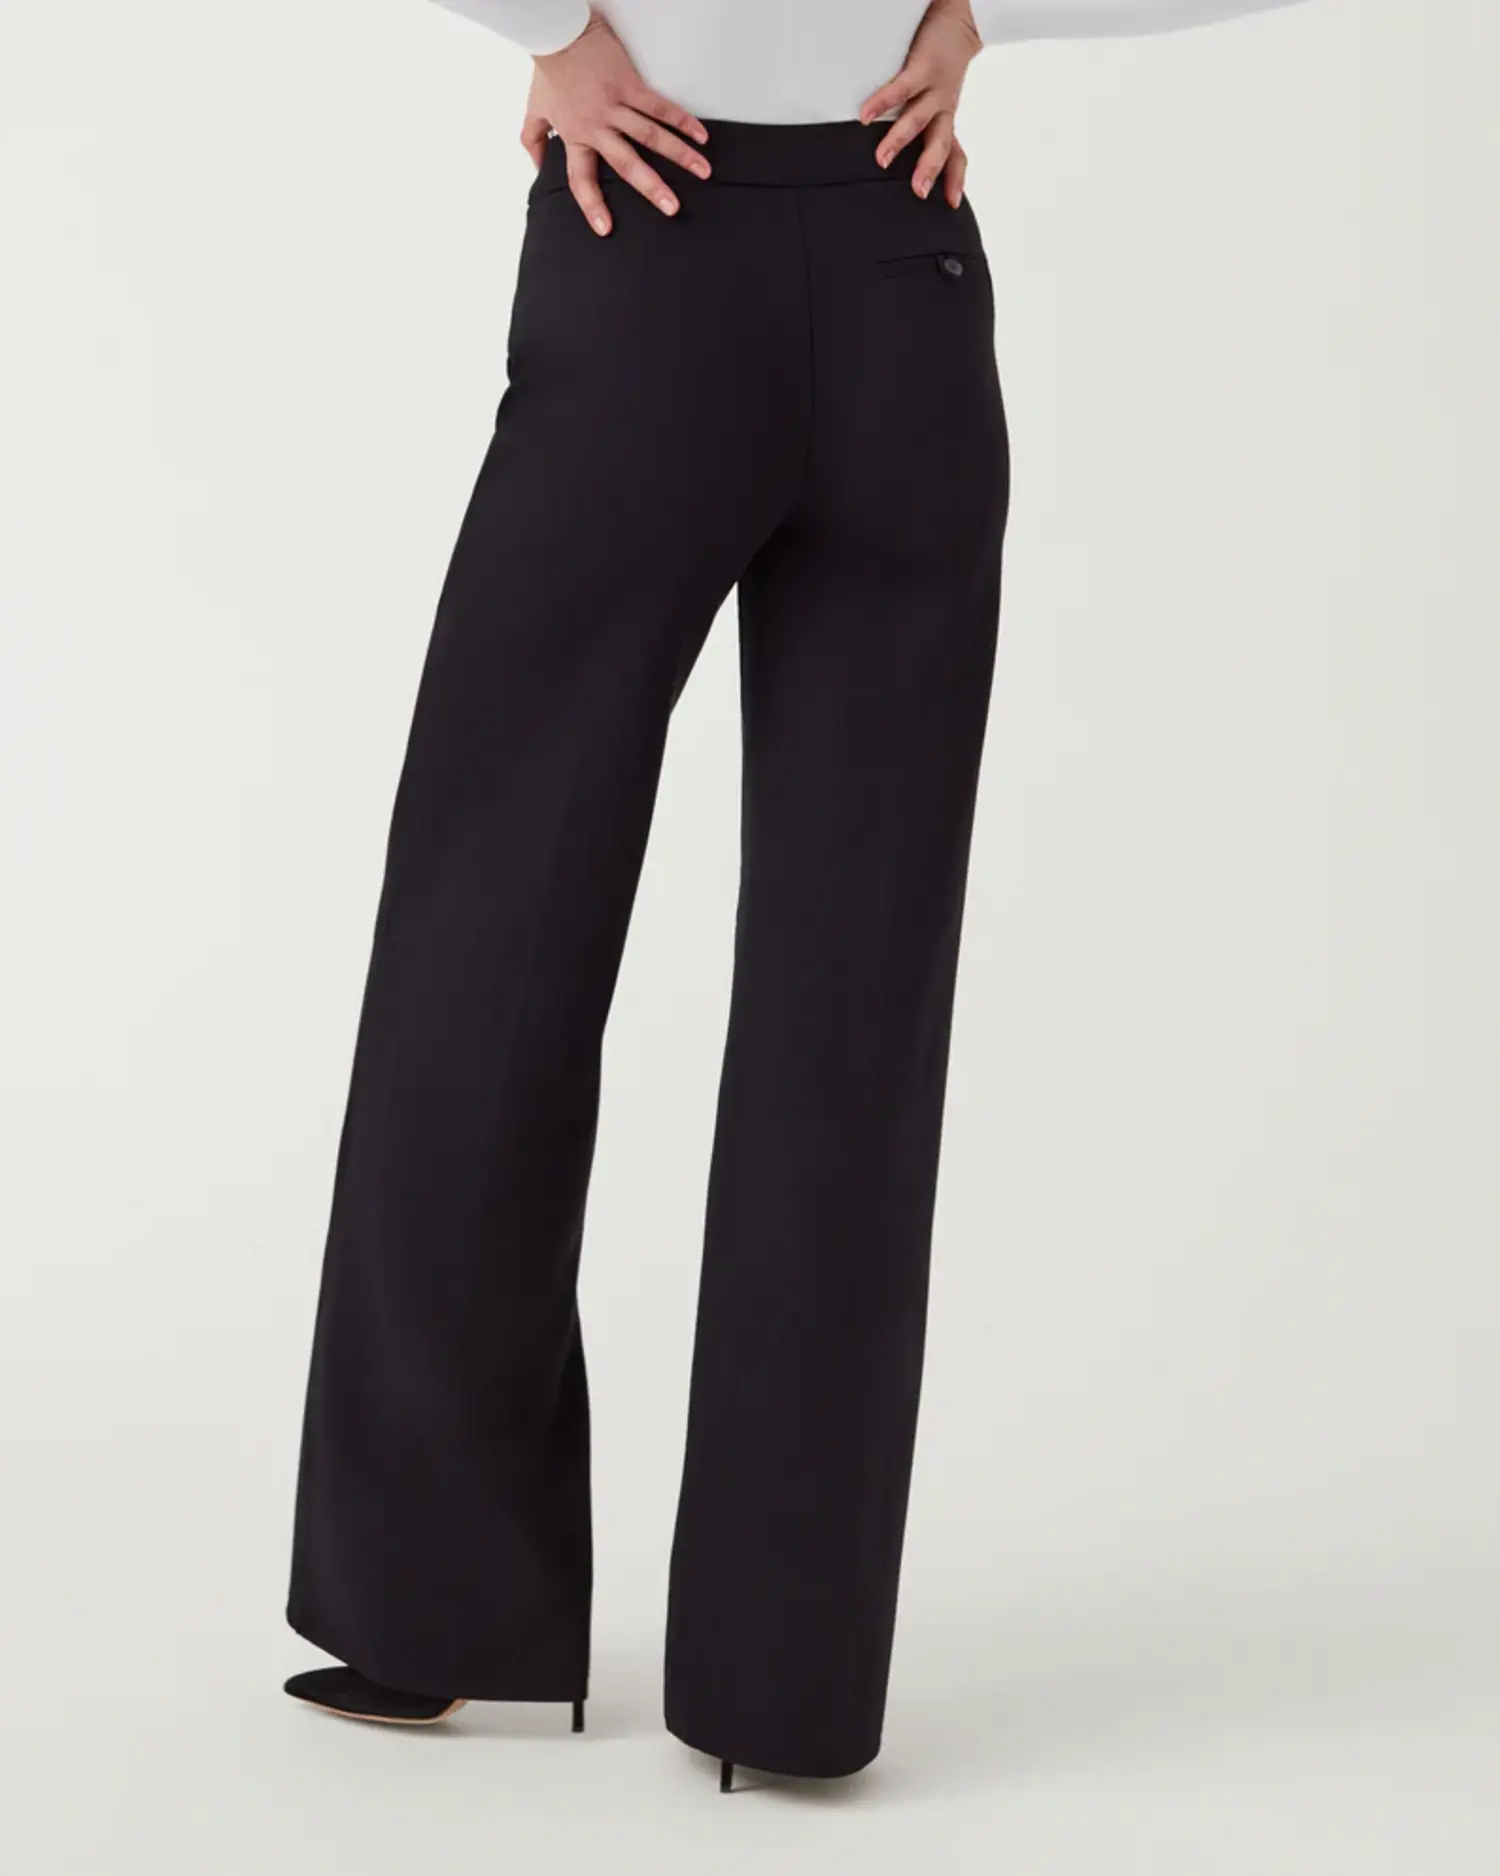 SPANX, Pants & Jumpsuits, Spanx The Perfect Pant Slim Straight Black  Legging Ponte Pants Size 3x Nwot